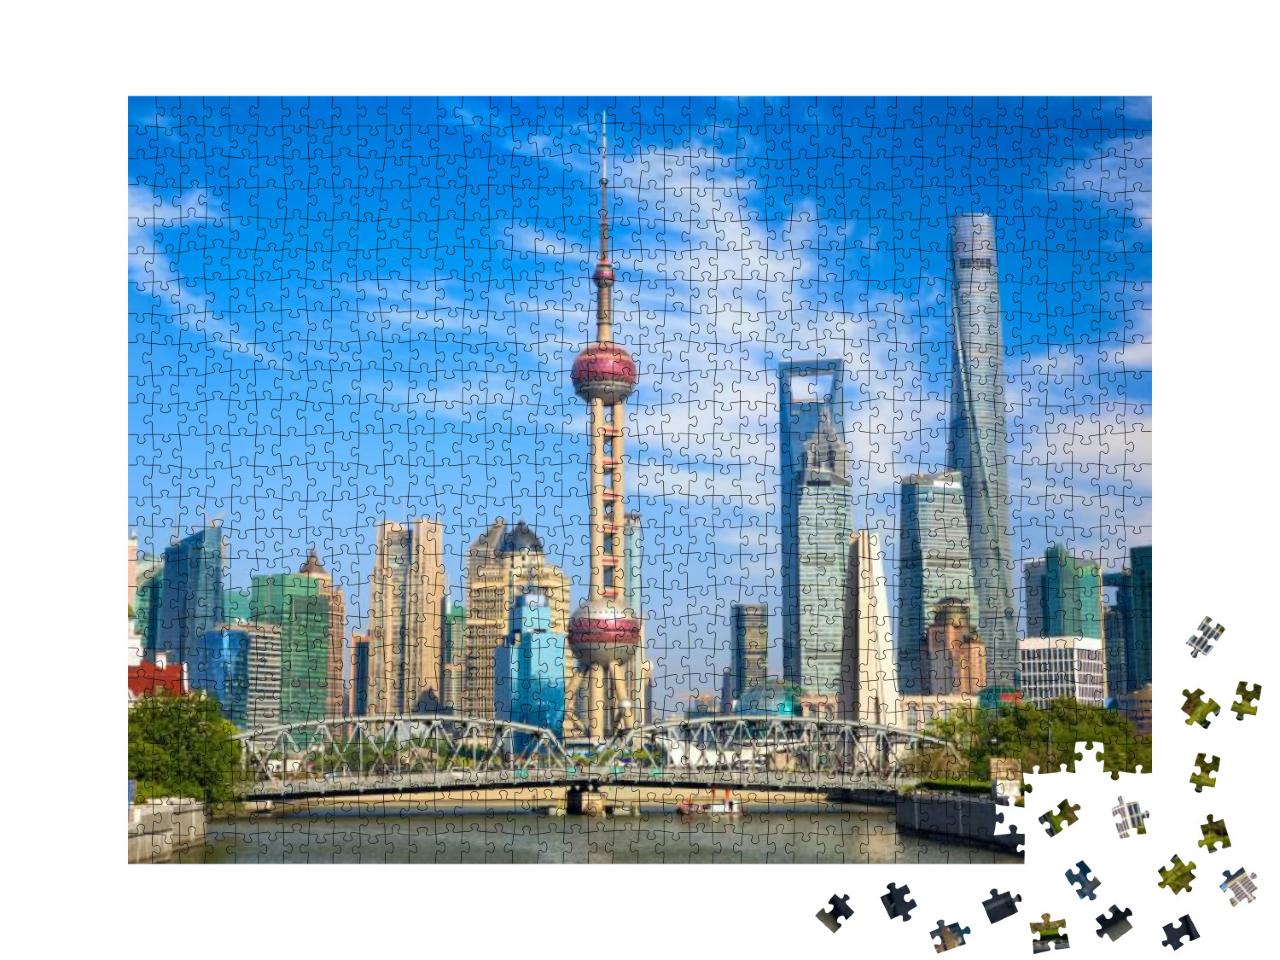 Shanghai Skyline with Historical Waibaidu Bridge, China... Jigsaw Puzzle with 1000 pieces